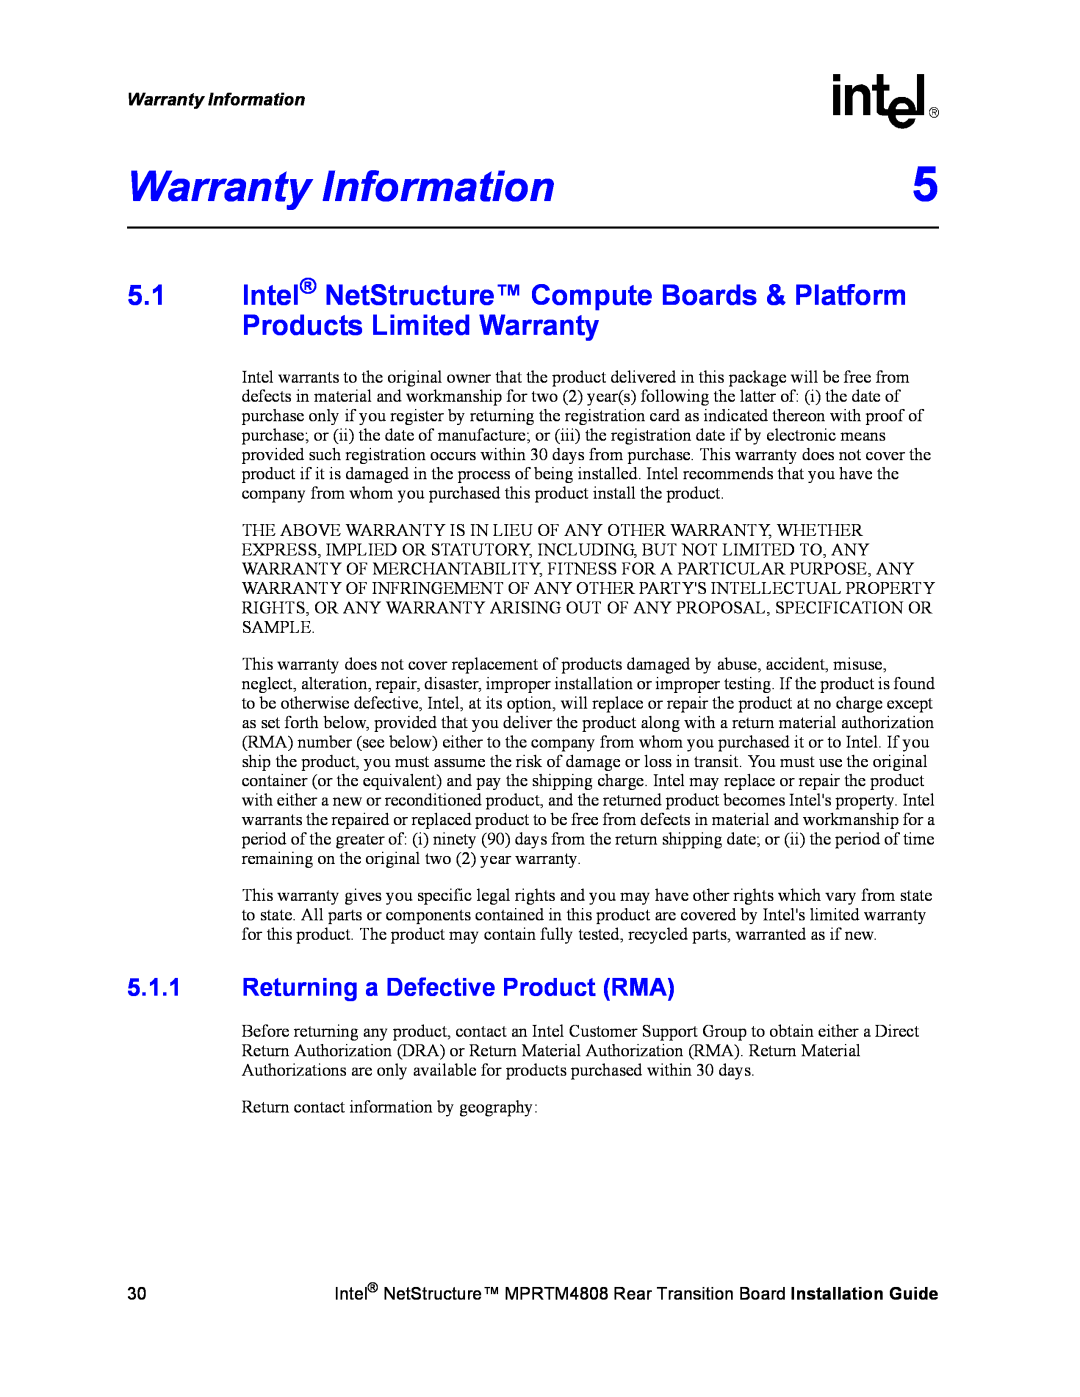 Intel MPRTM4808 manual Warranty Information, 5.1.1Returning a Defective Product RMA 